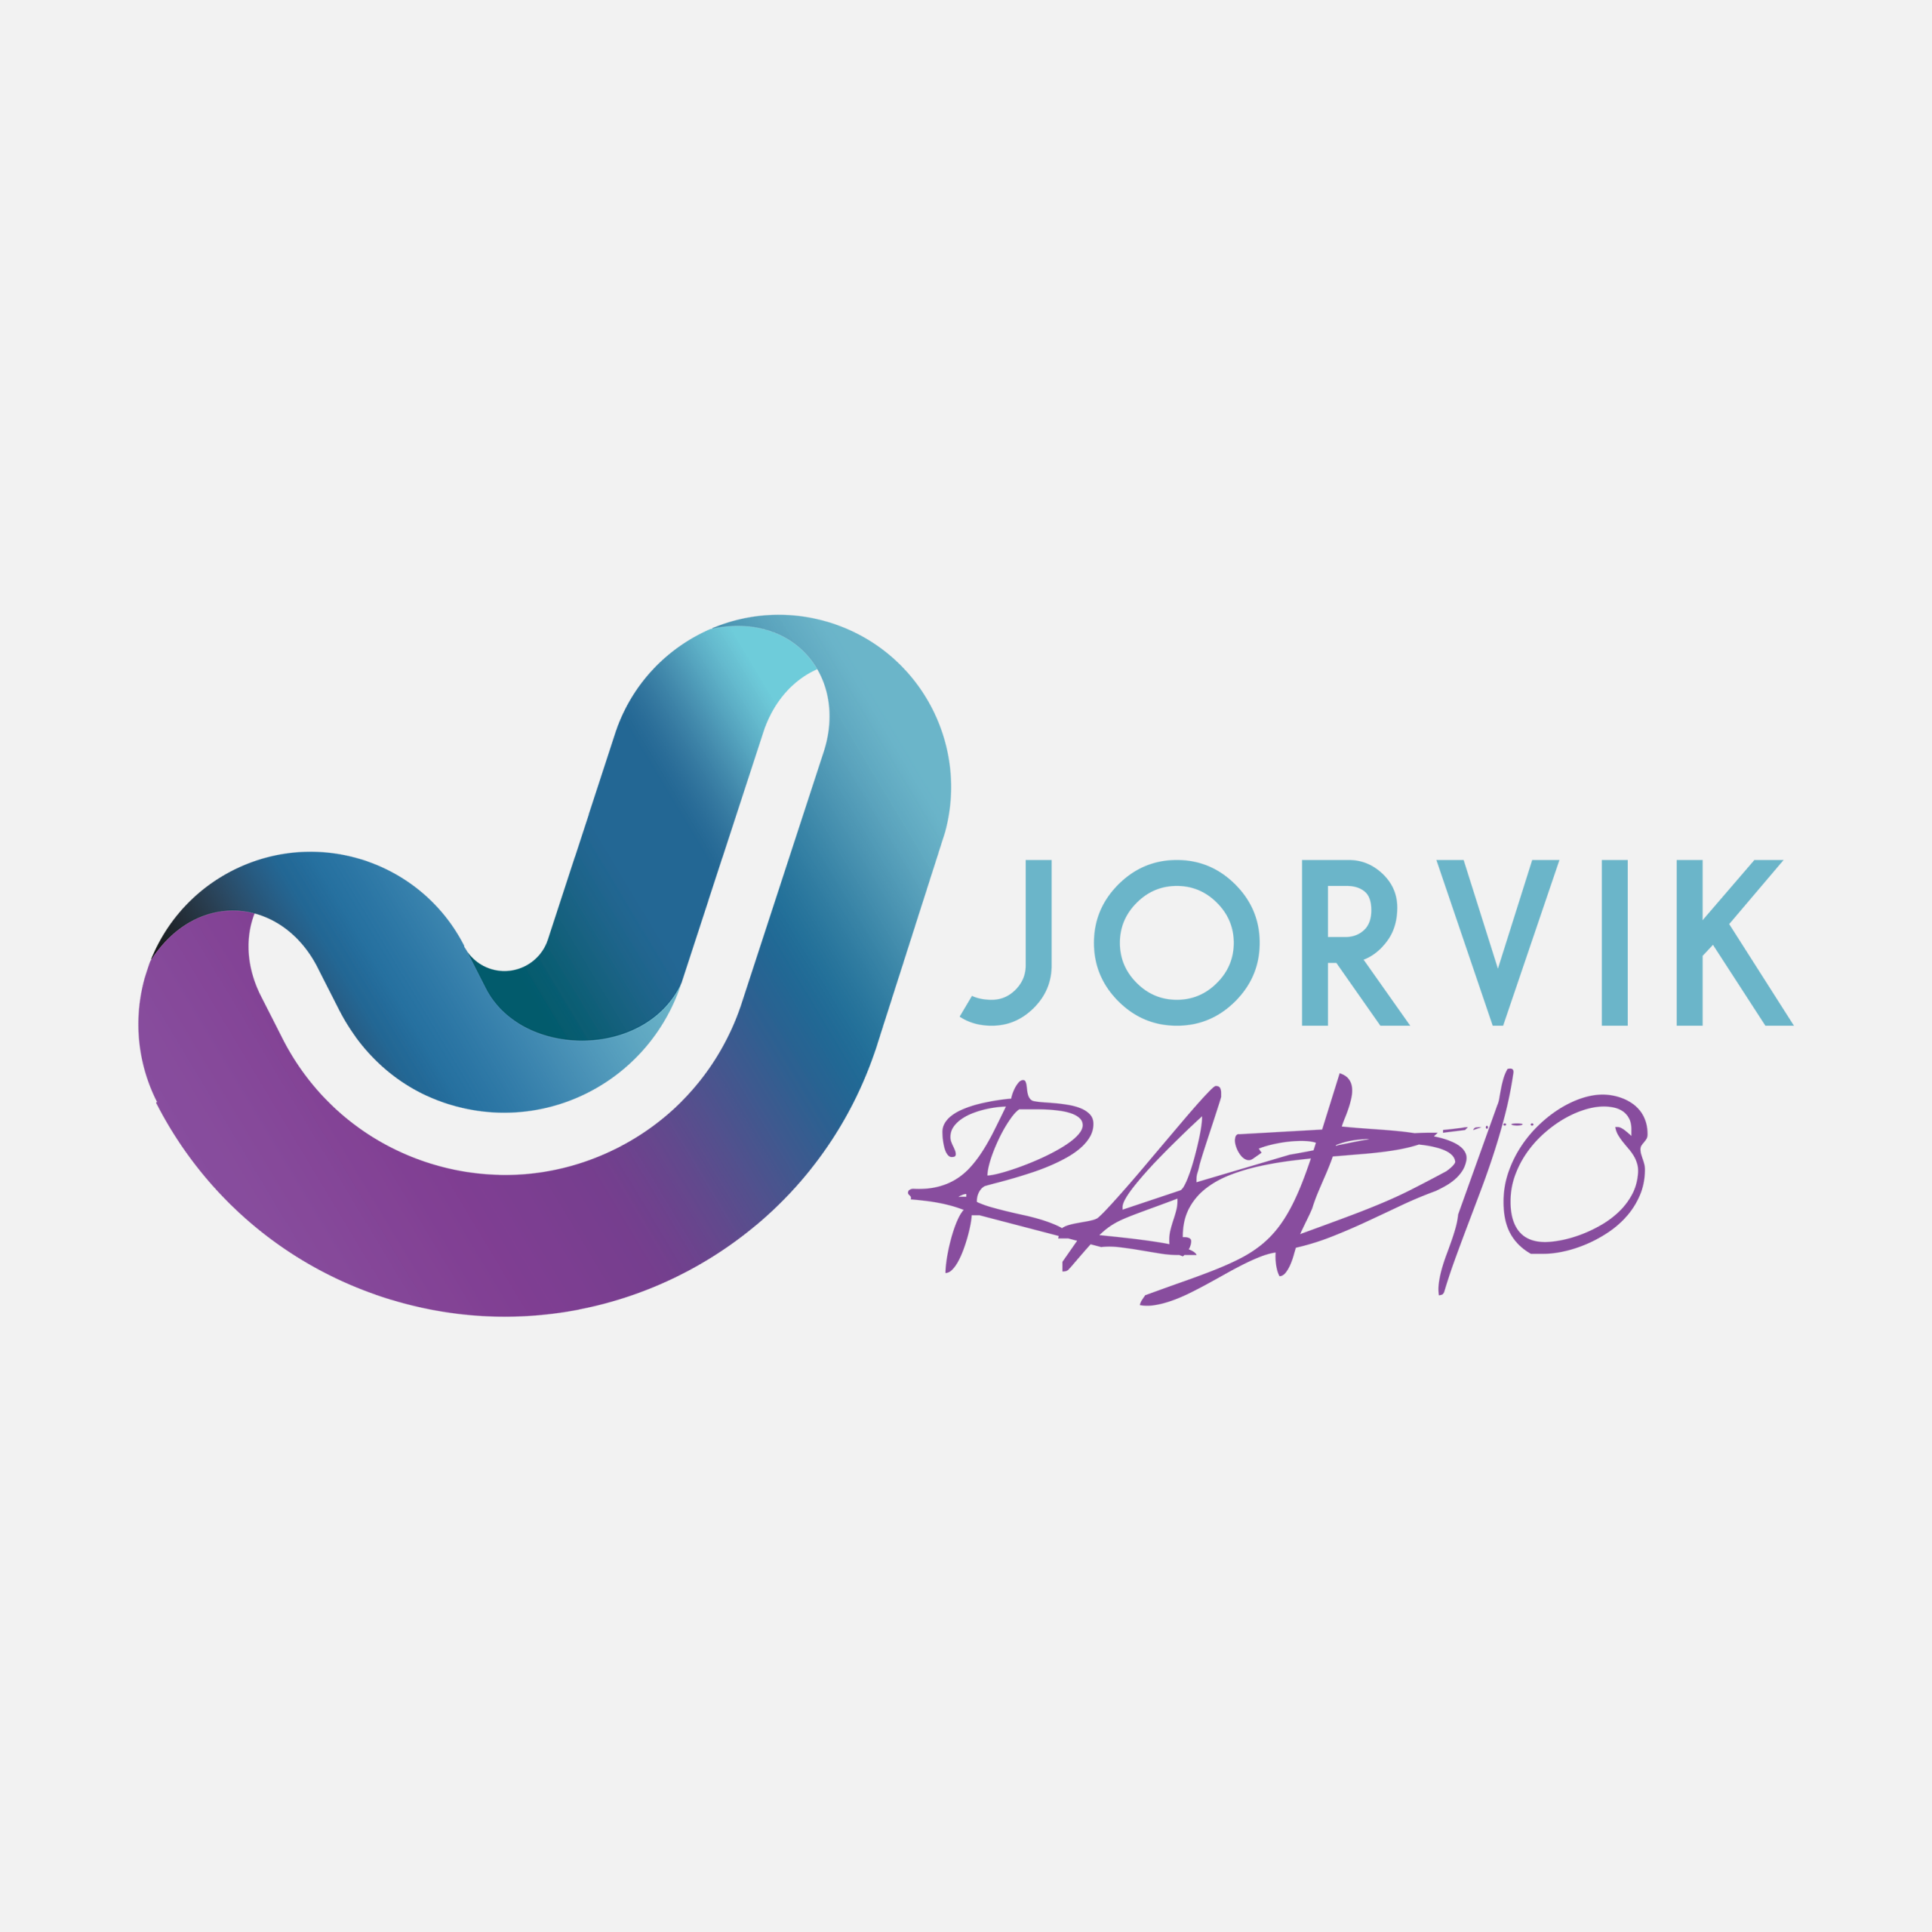 jorvik-radio